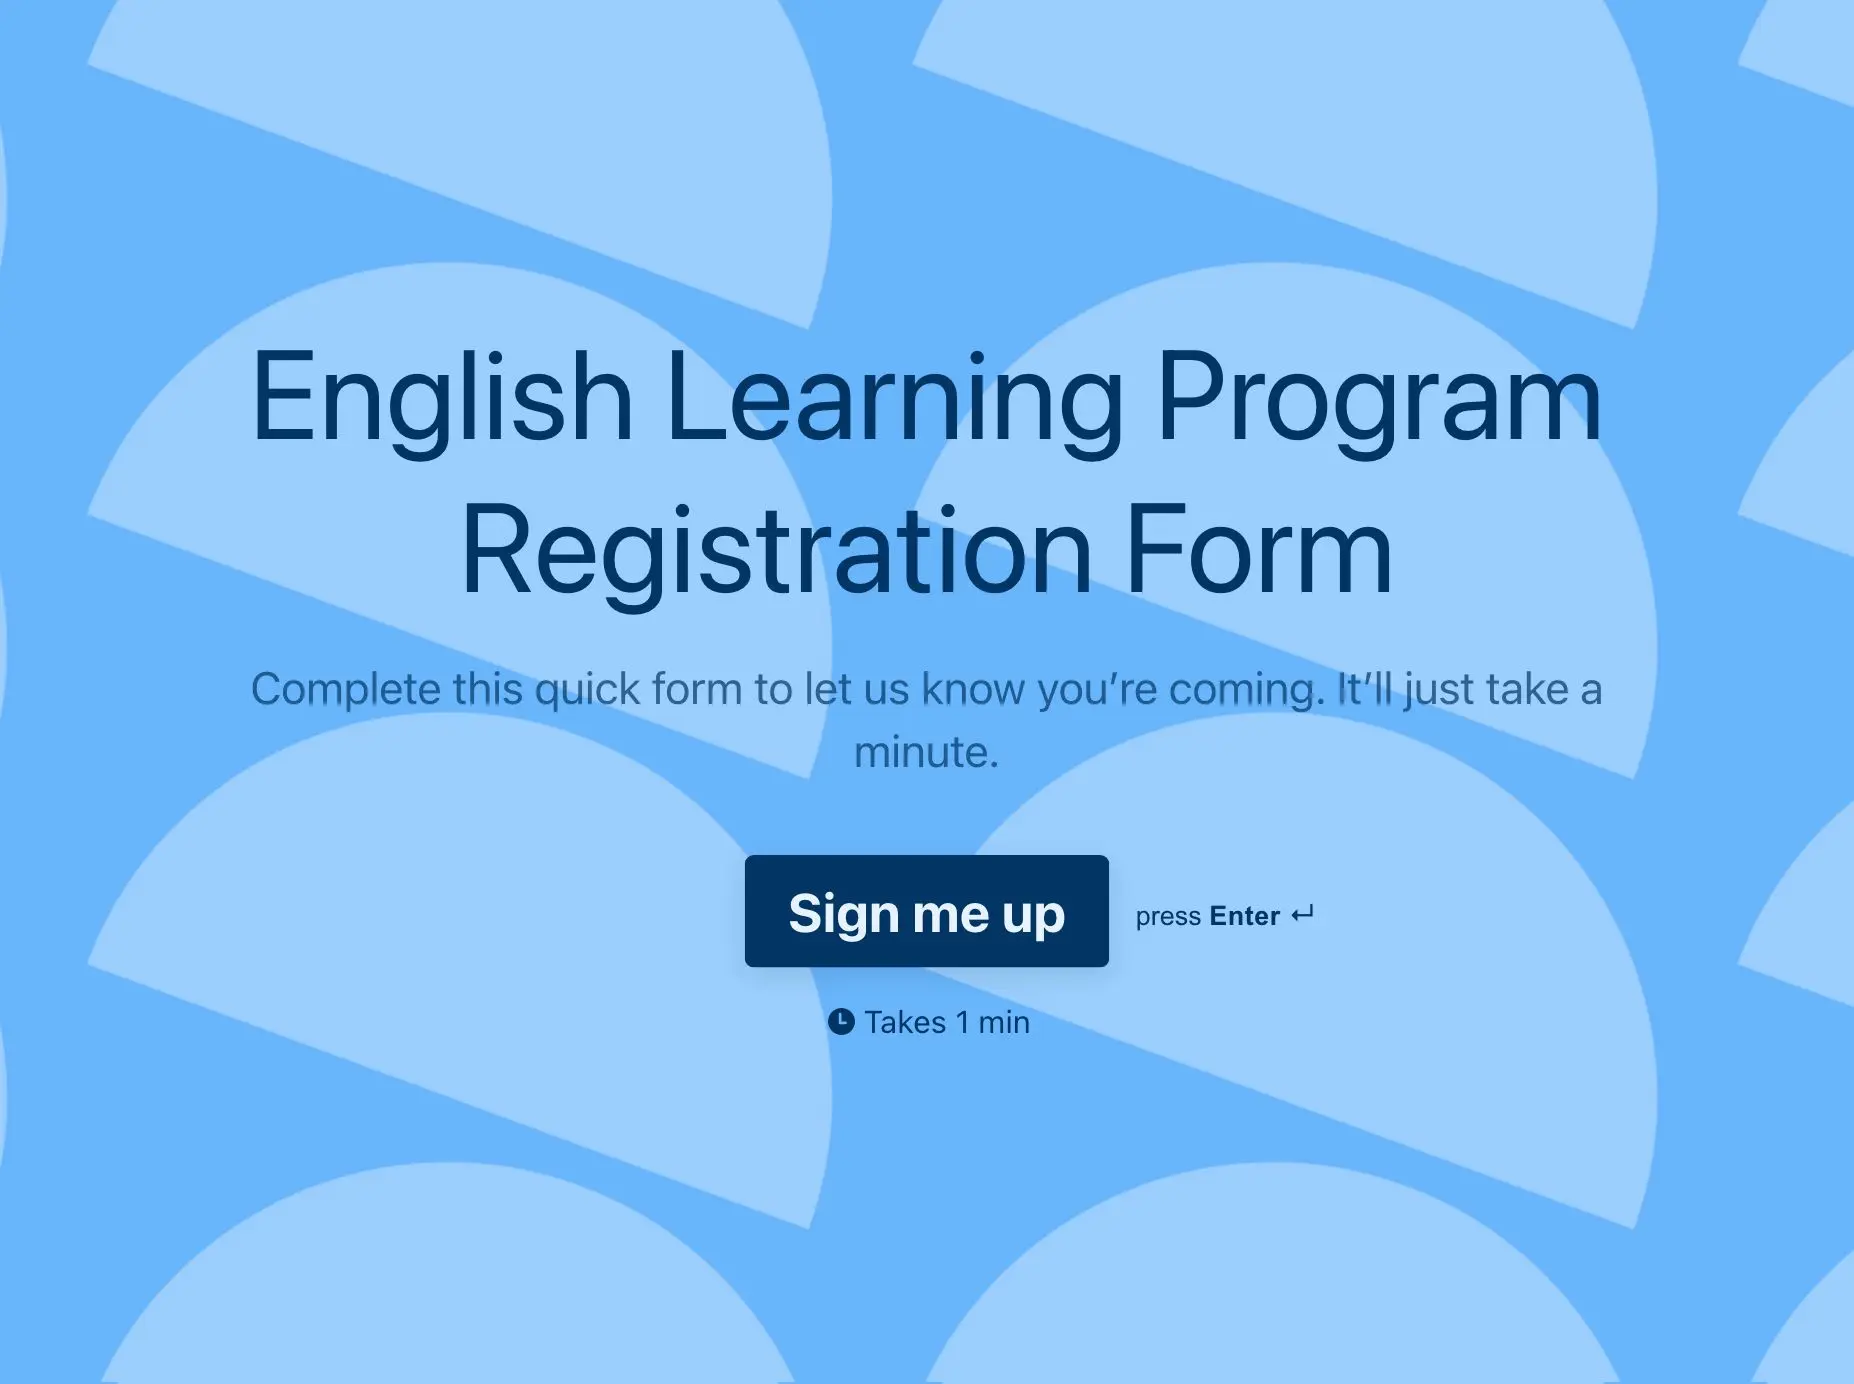 English Learning Program Registration Form Template Hero